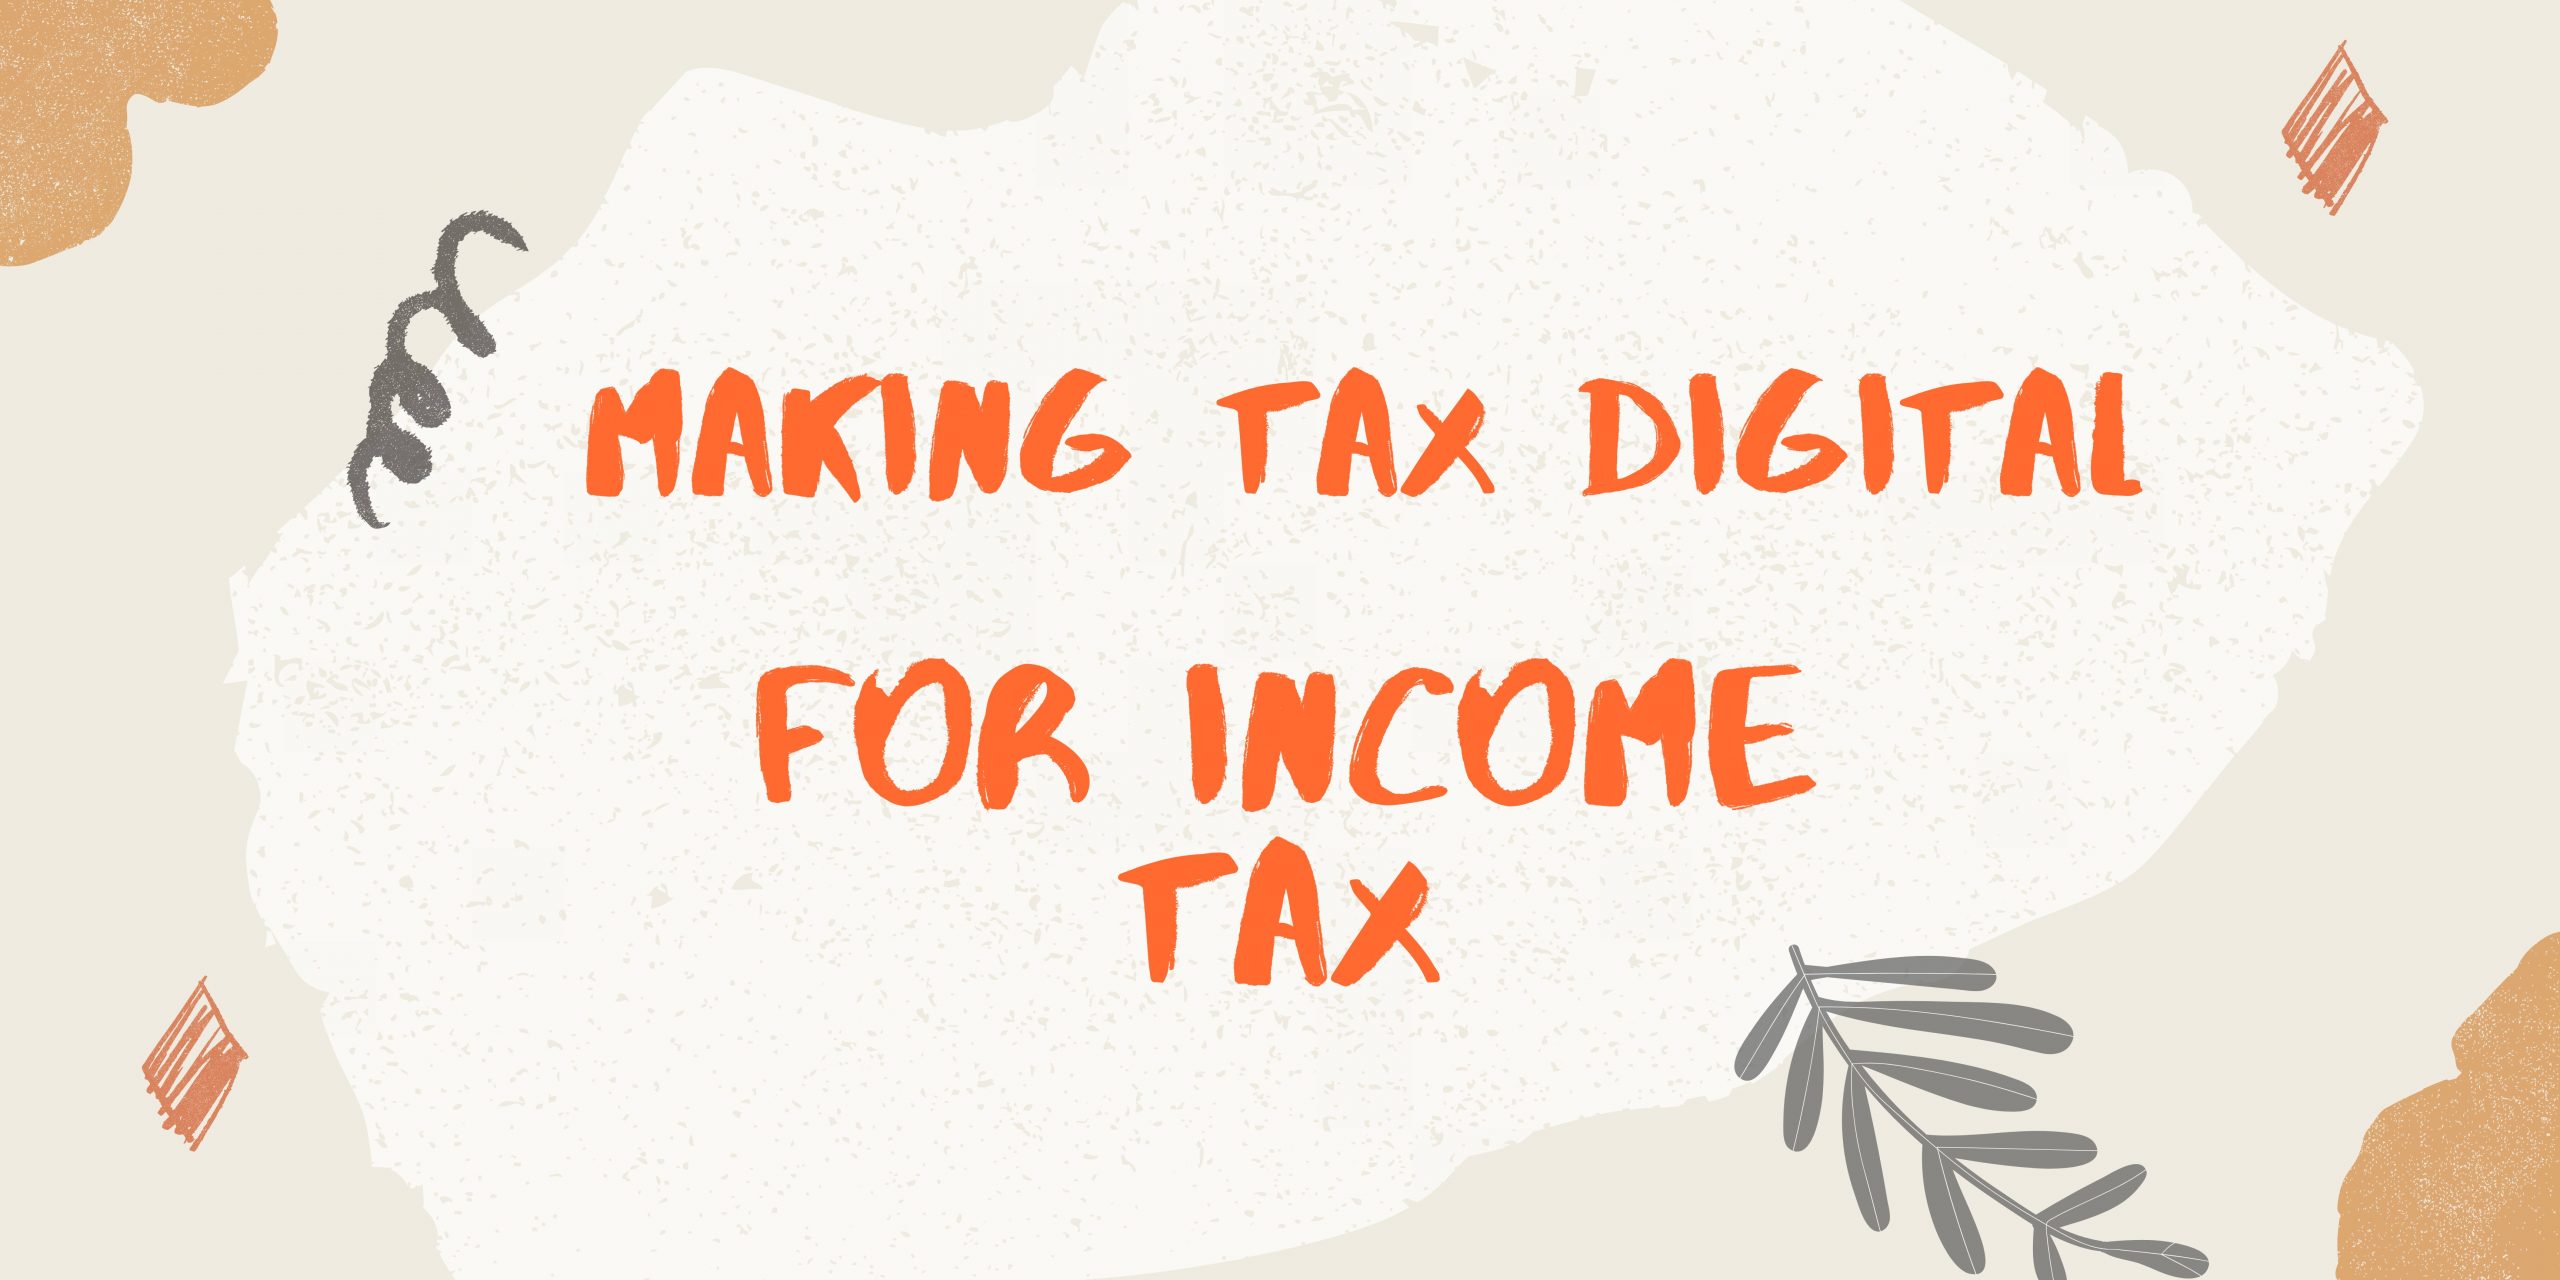 Digital-Tax-Accountants